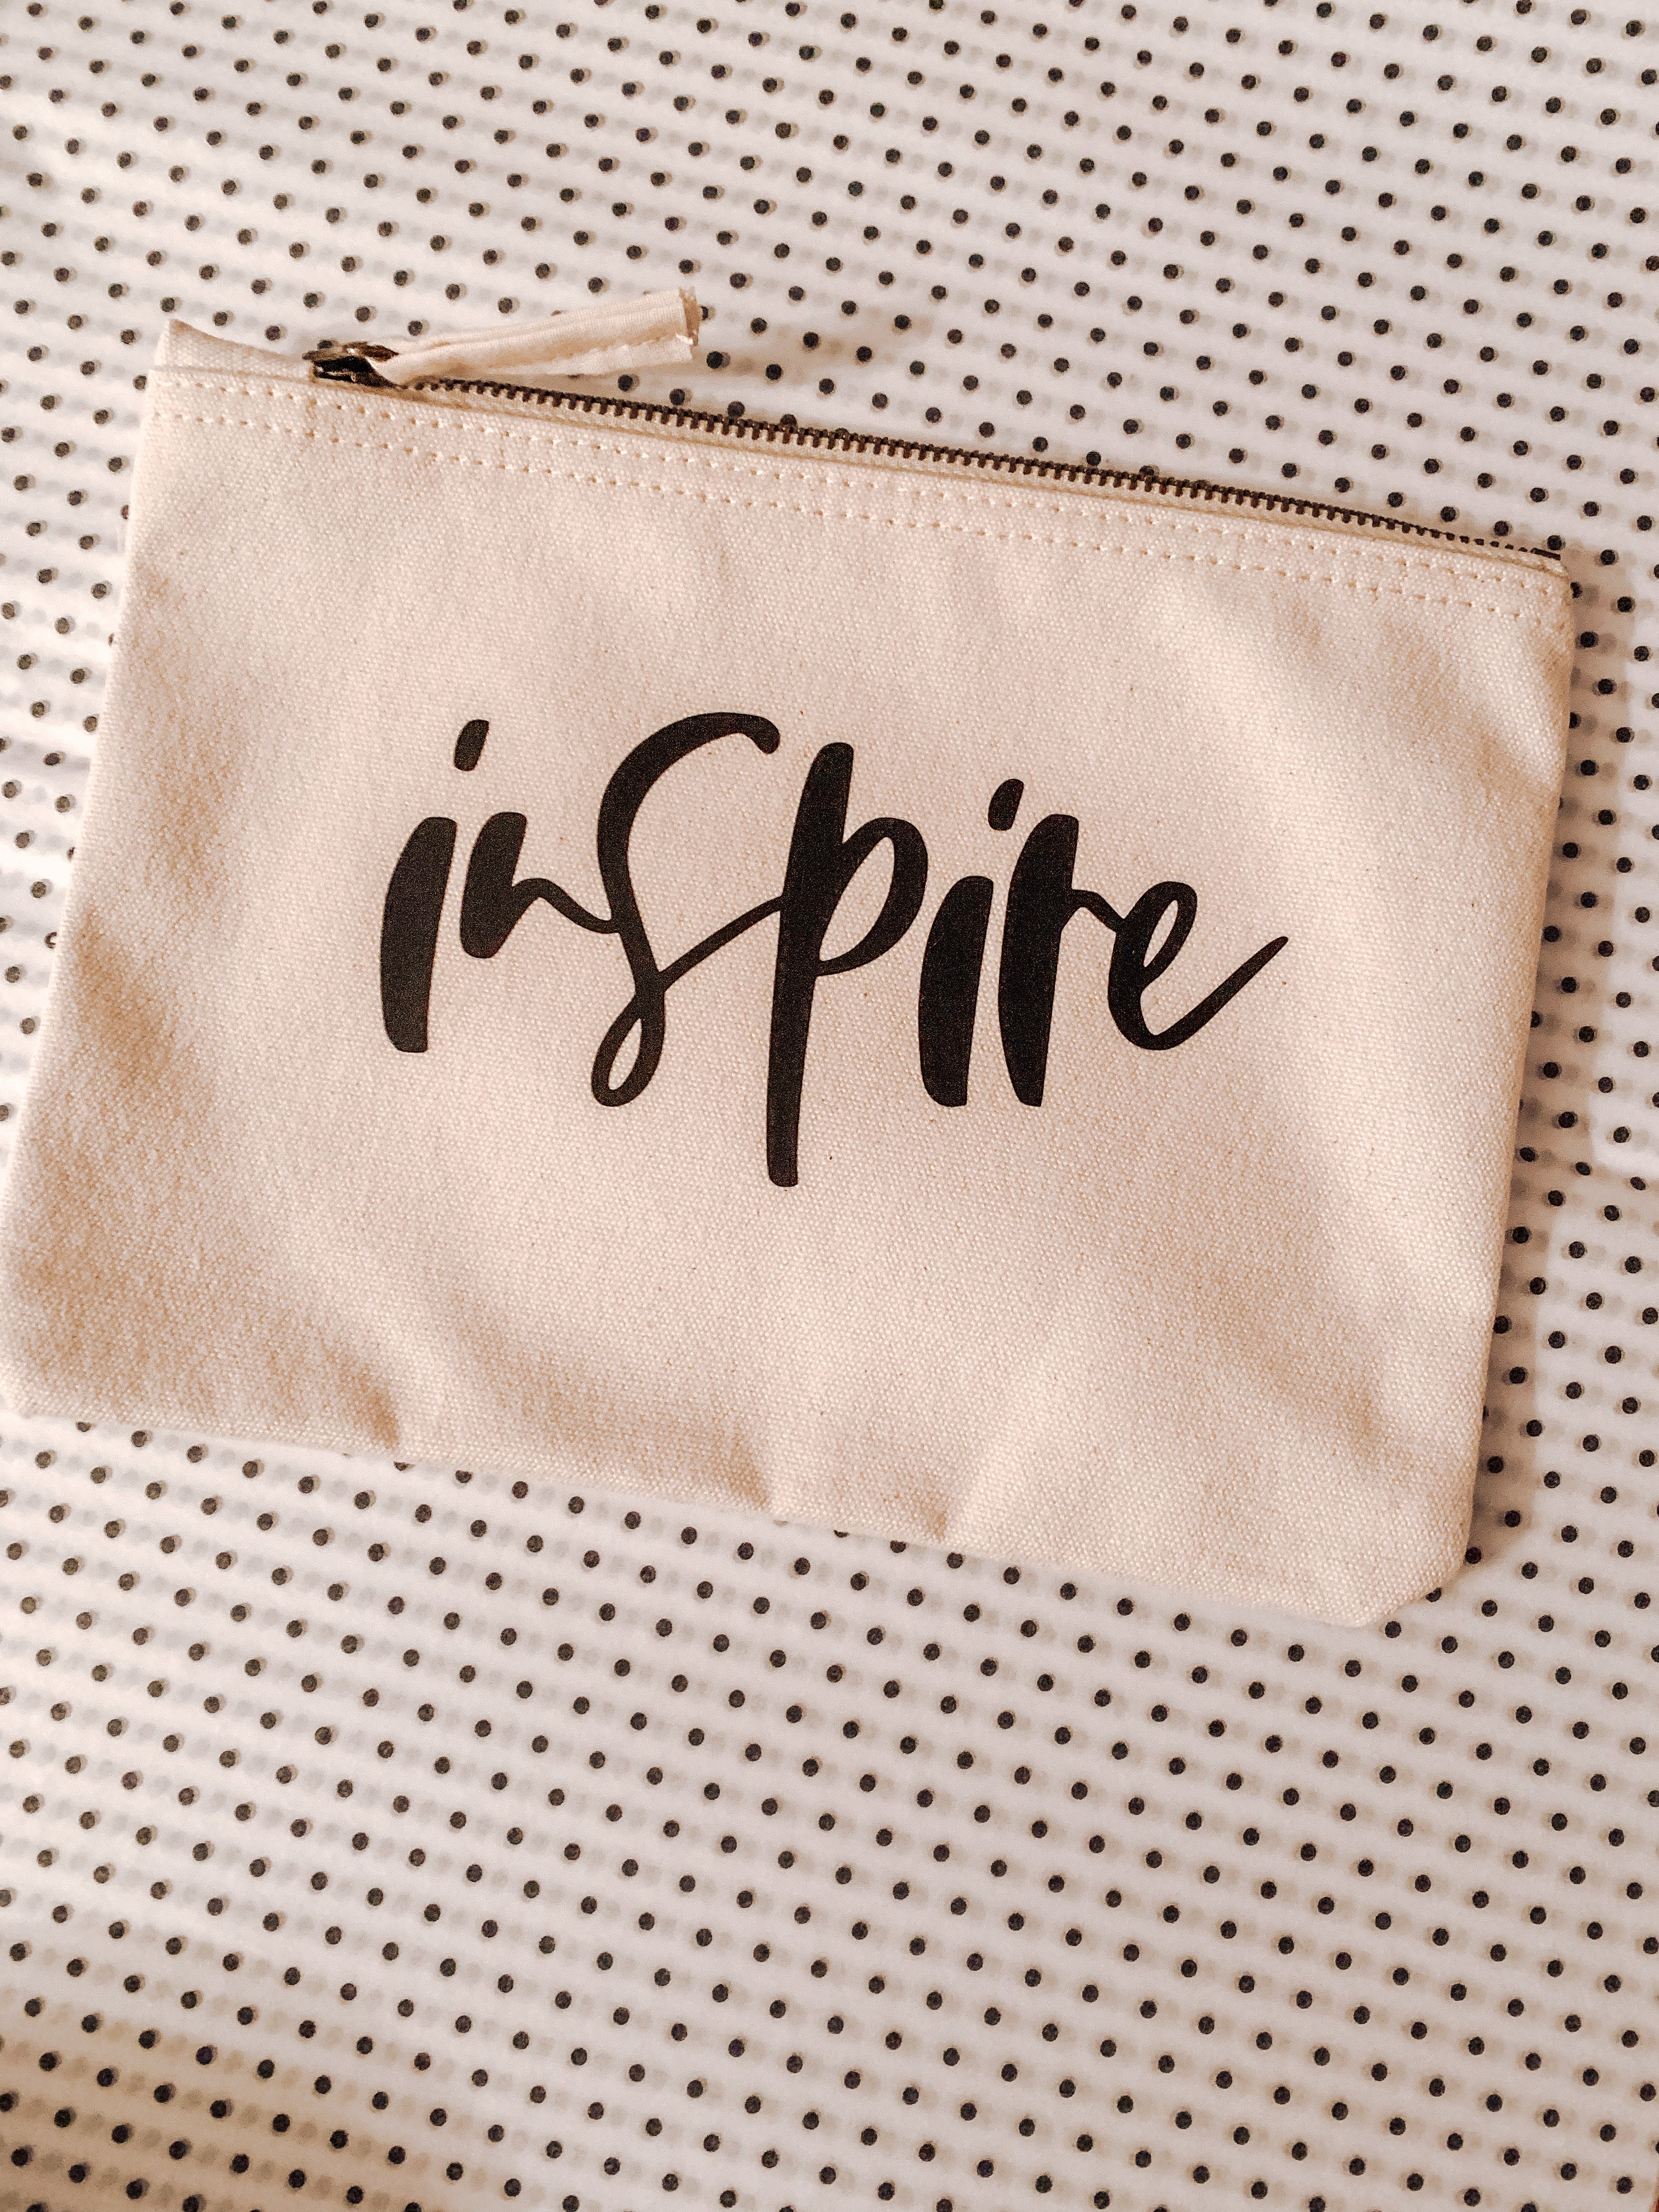 Inspire cotton canvas pouch /coin purse /make up zip bag